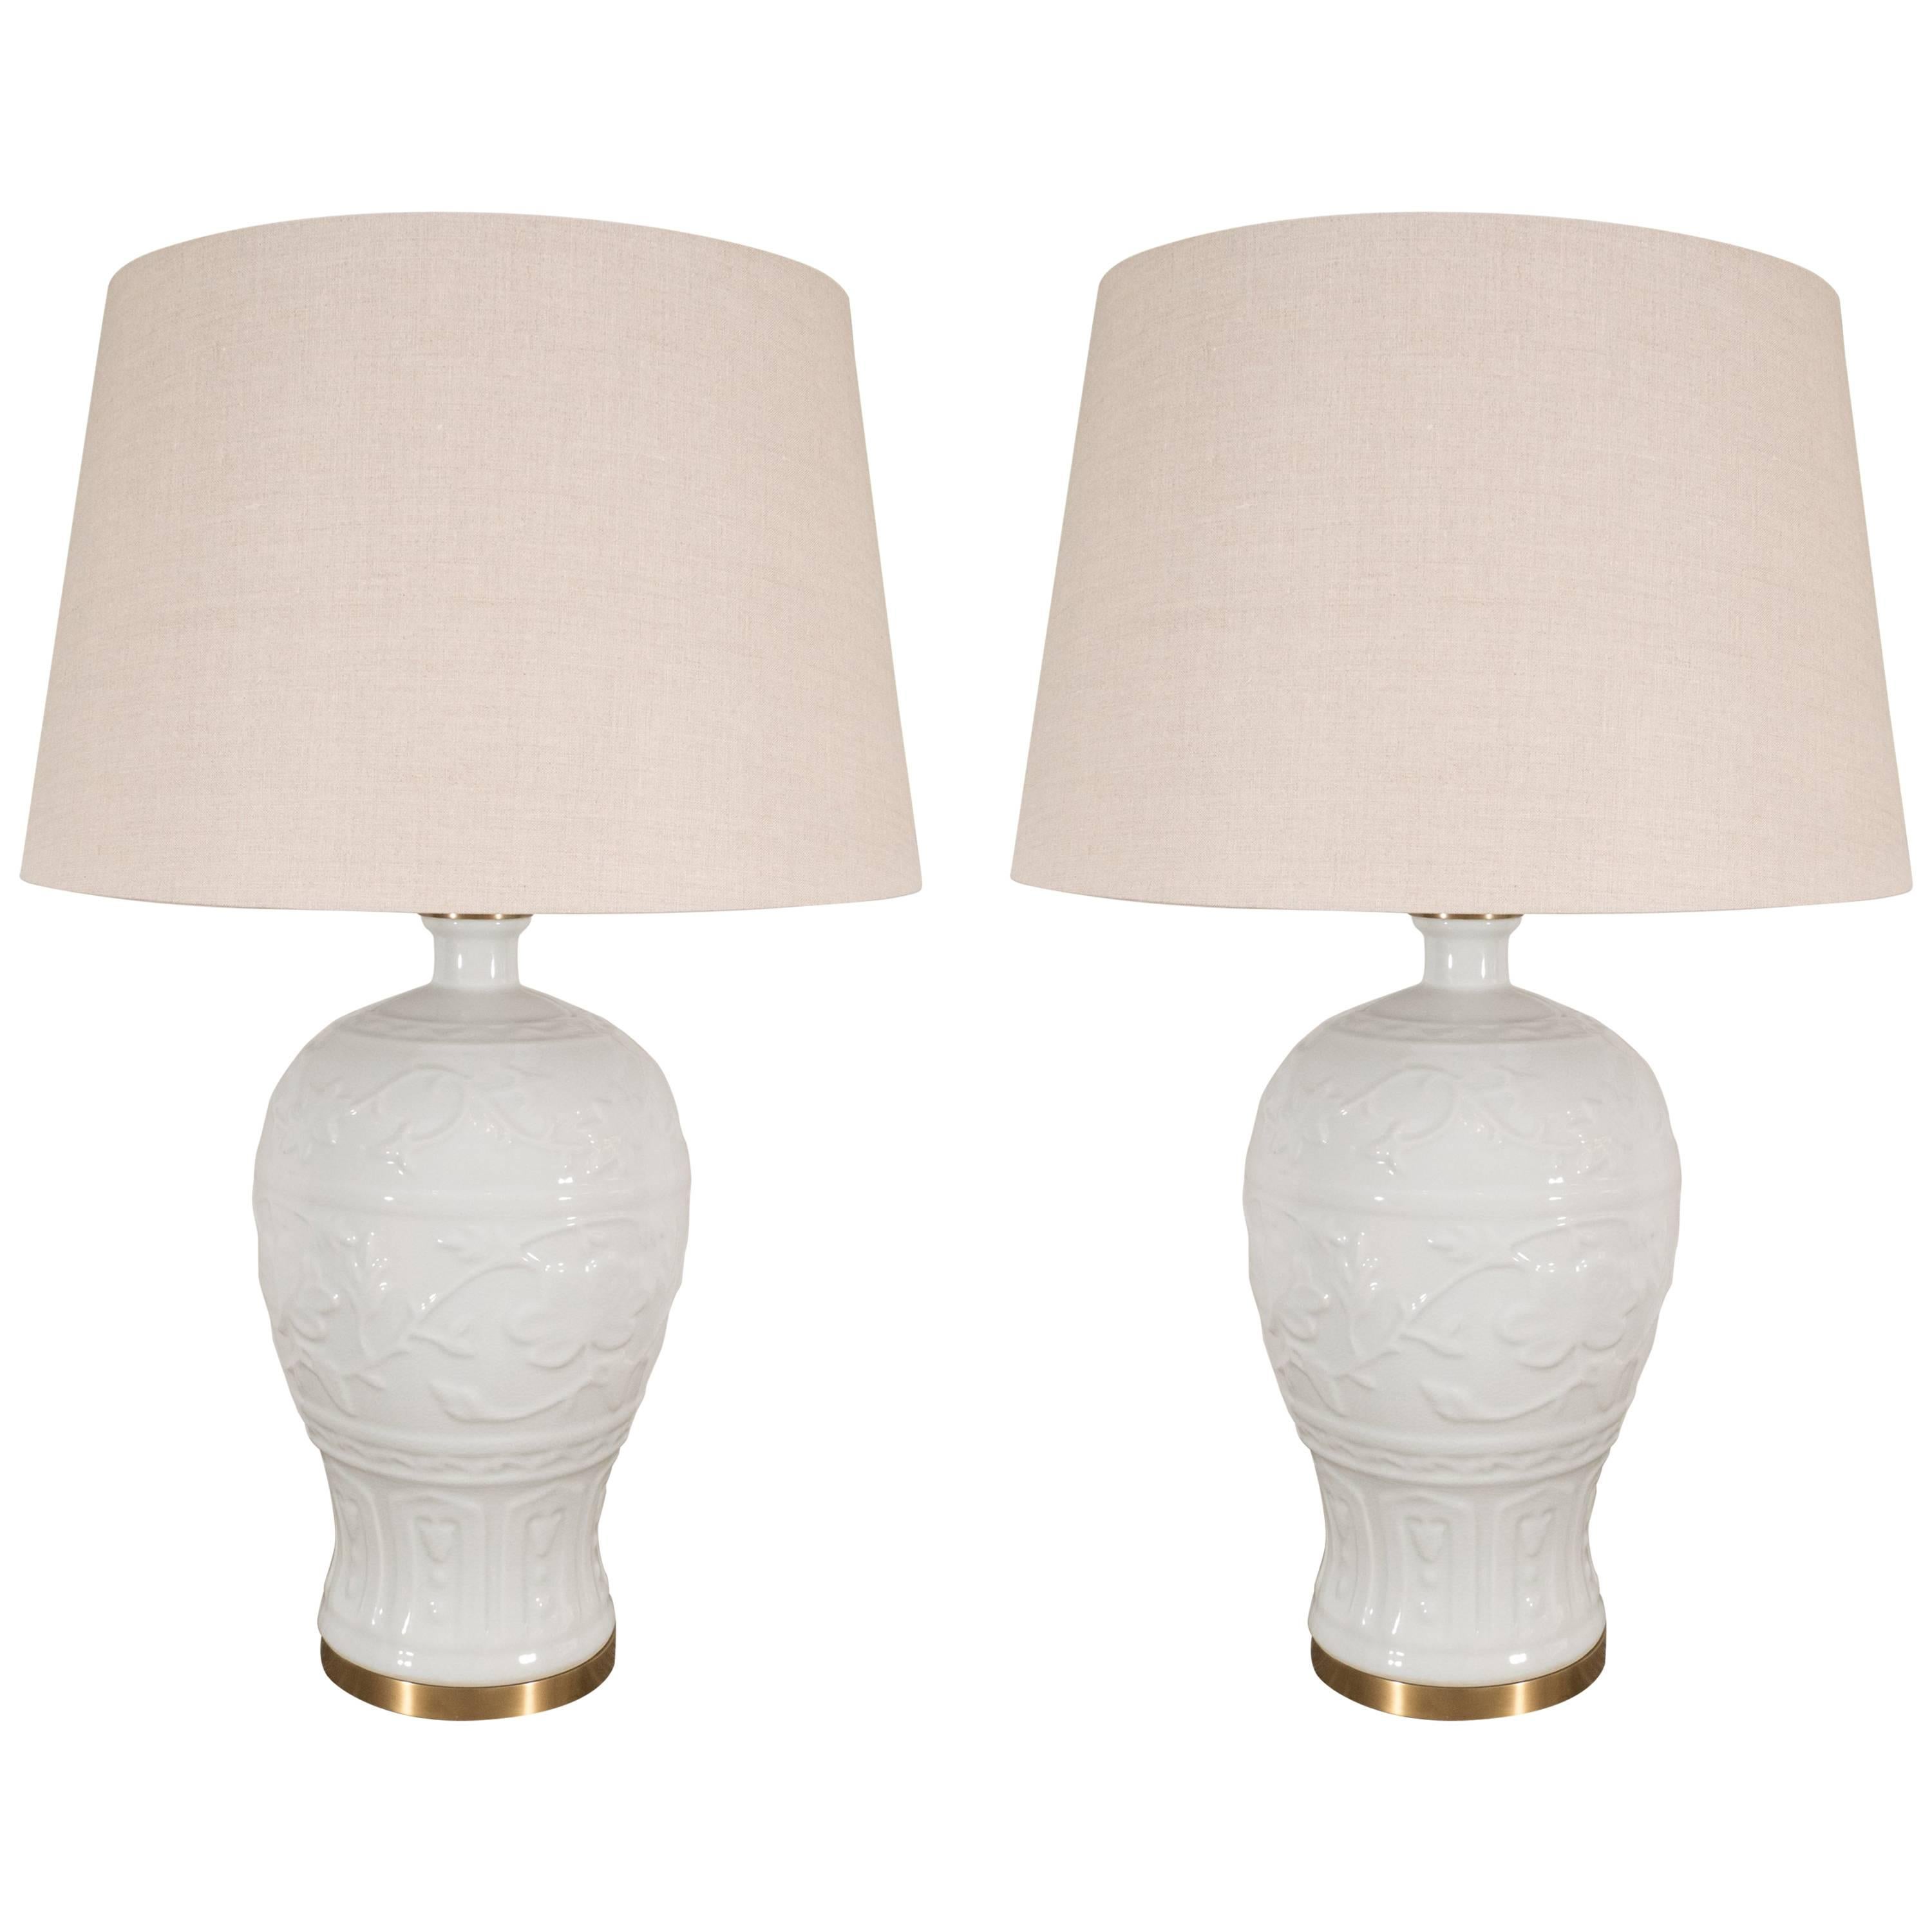 Pair of White Crackled Ceramic Lamps